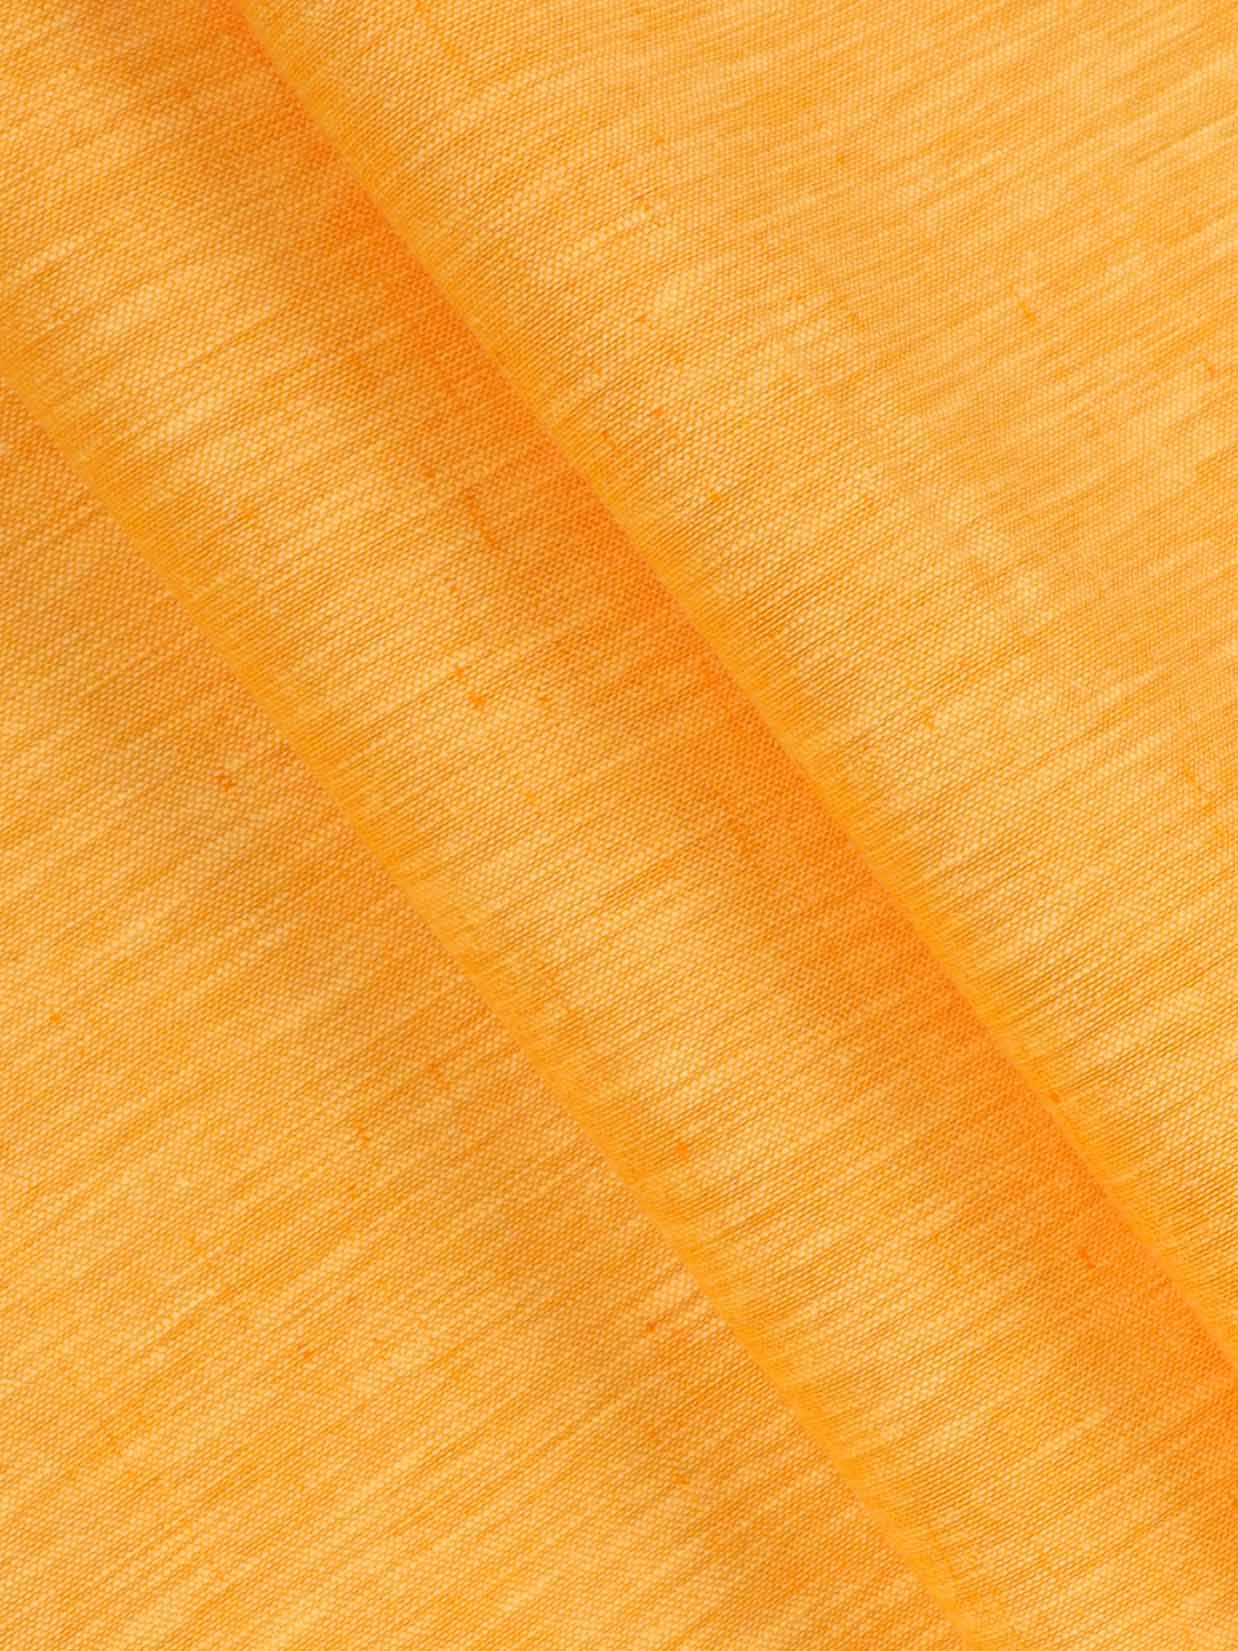 Cotton Blend Yellow Colour Plain Shirt Fabric Infinity-close view